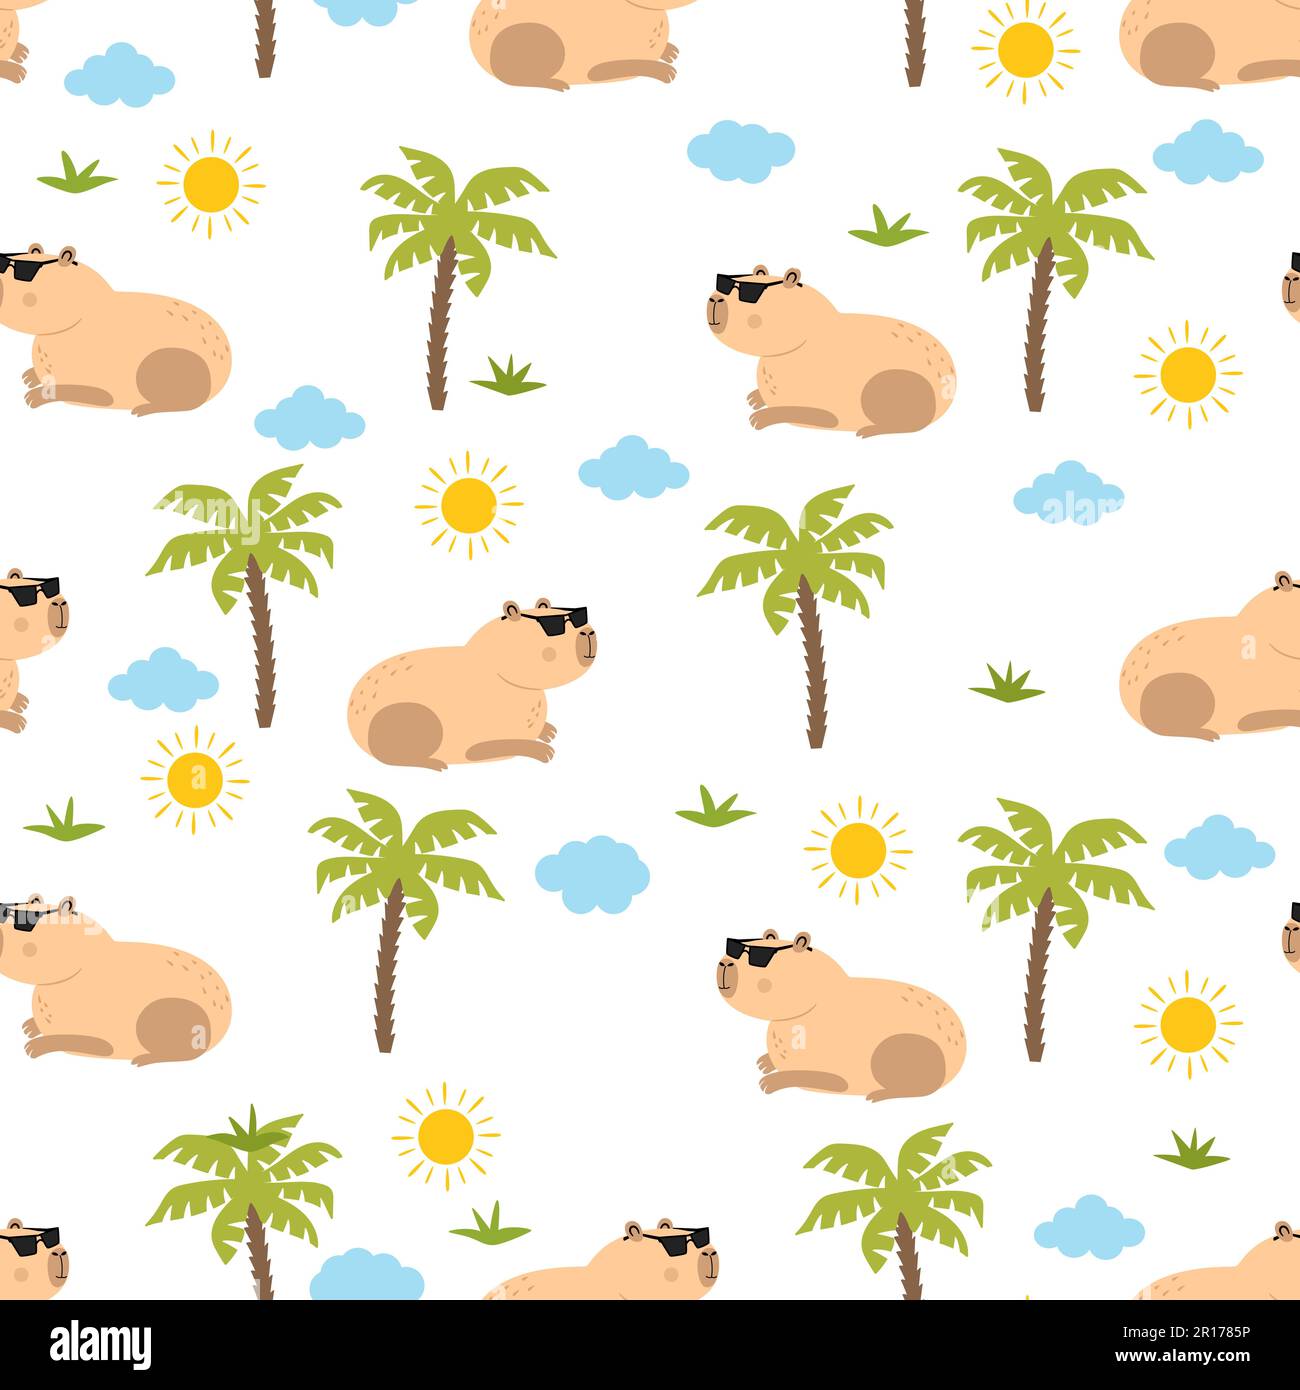 Capybara animal seamless with palm tree, sun and cloudy Stock Vector